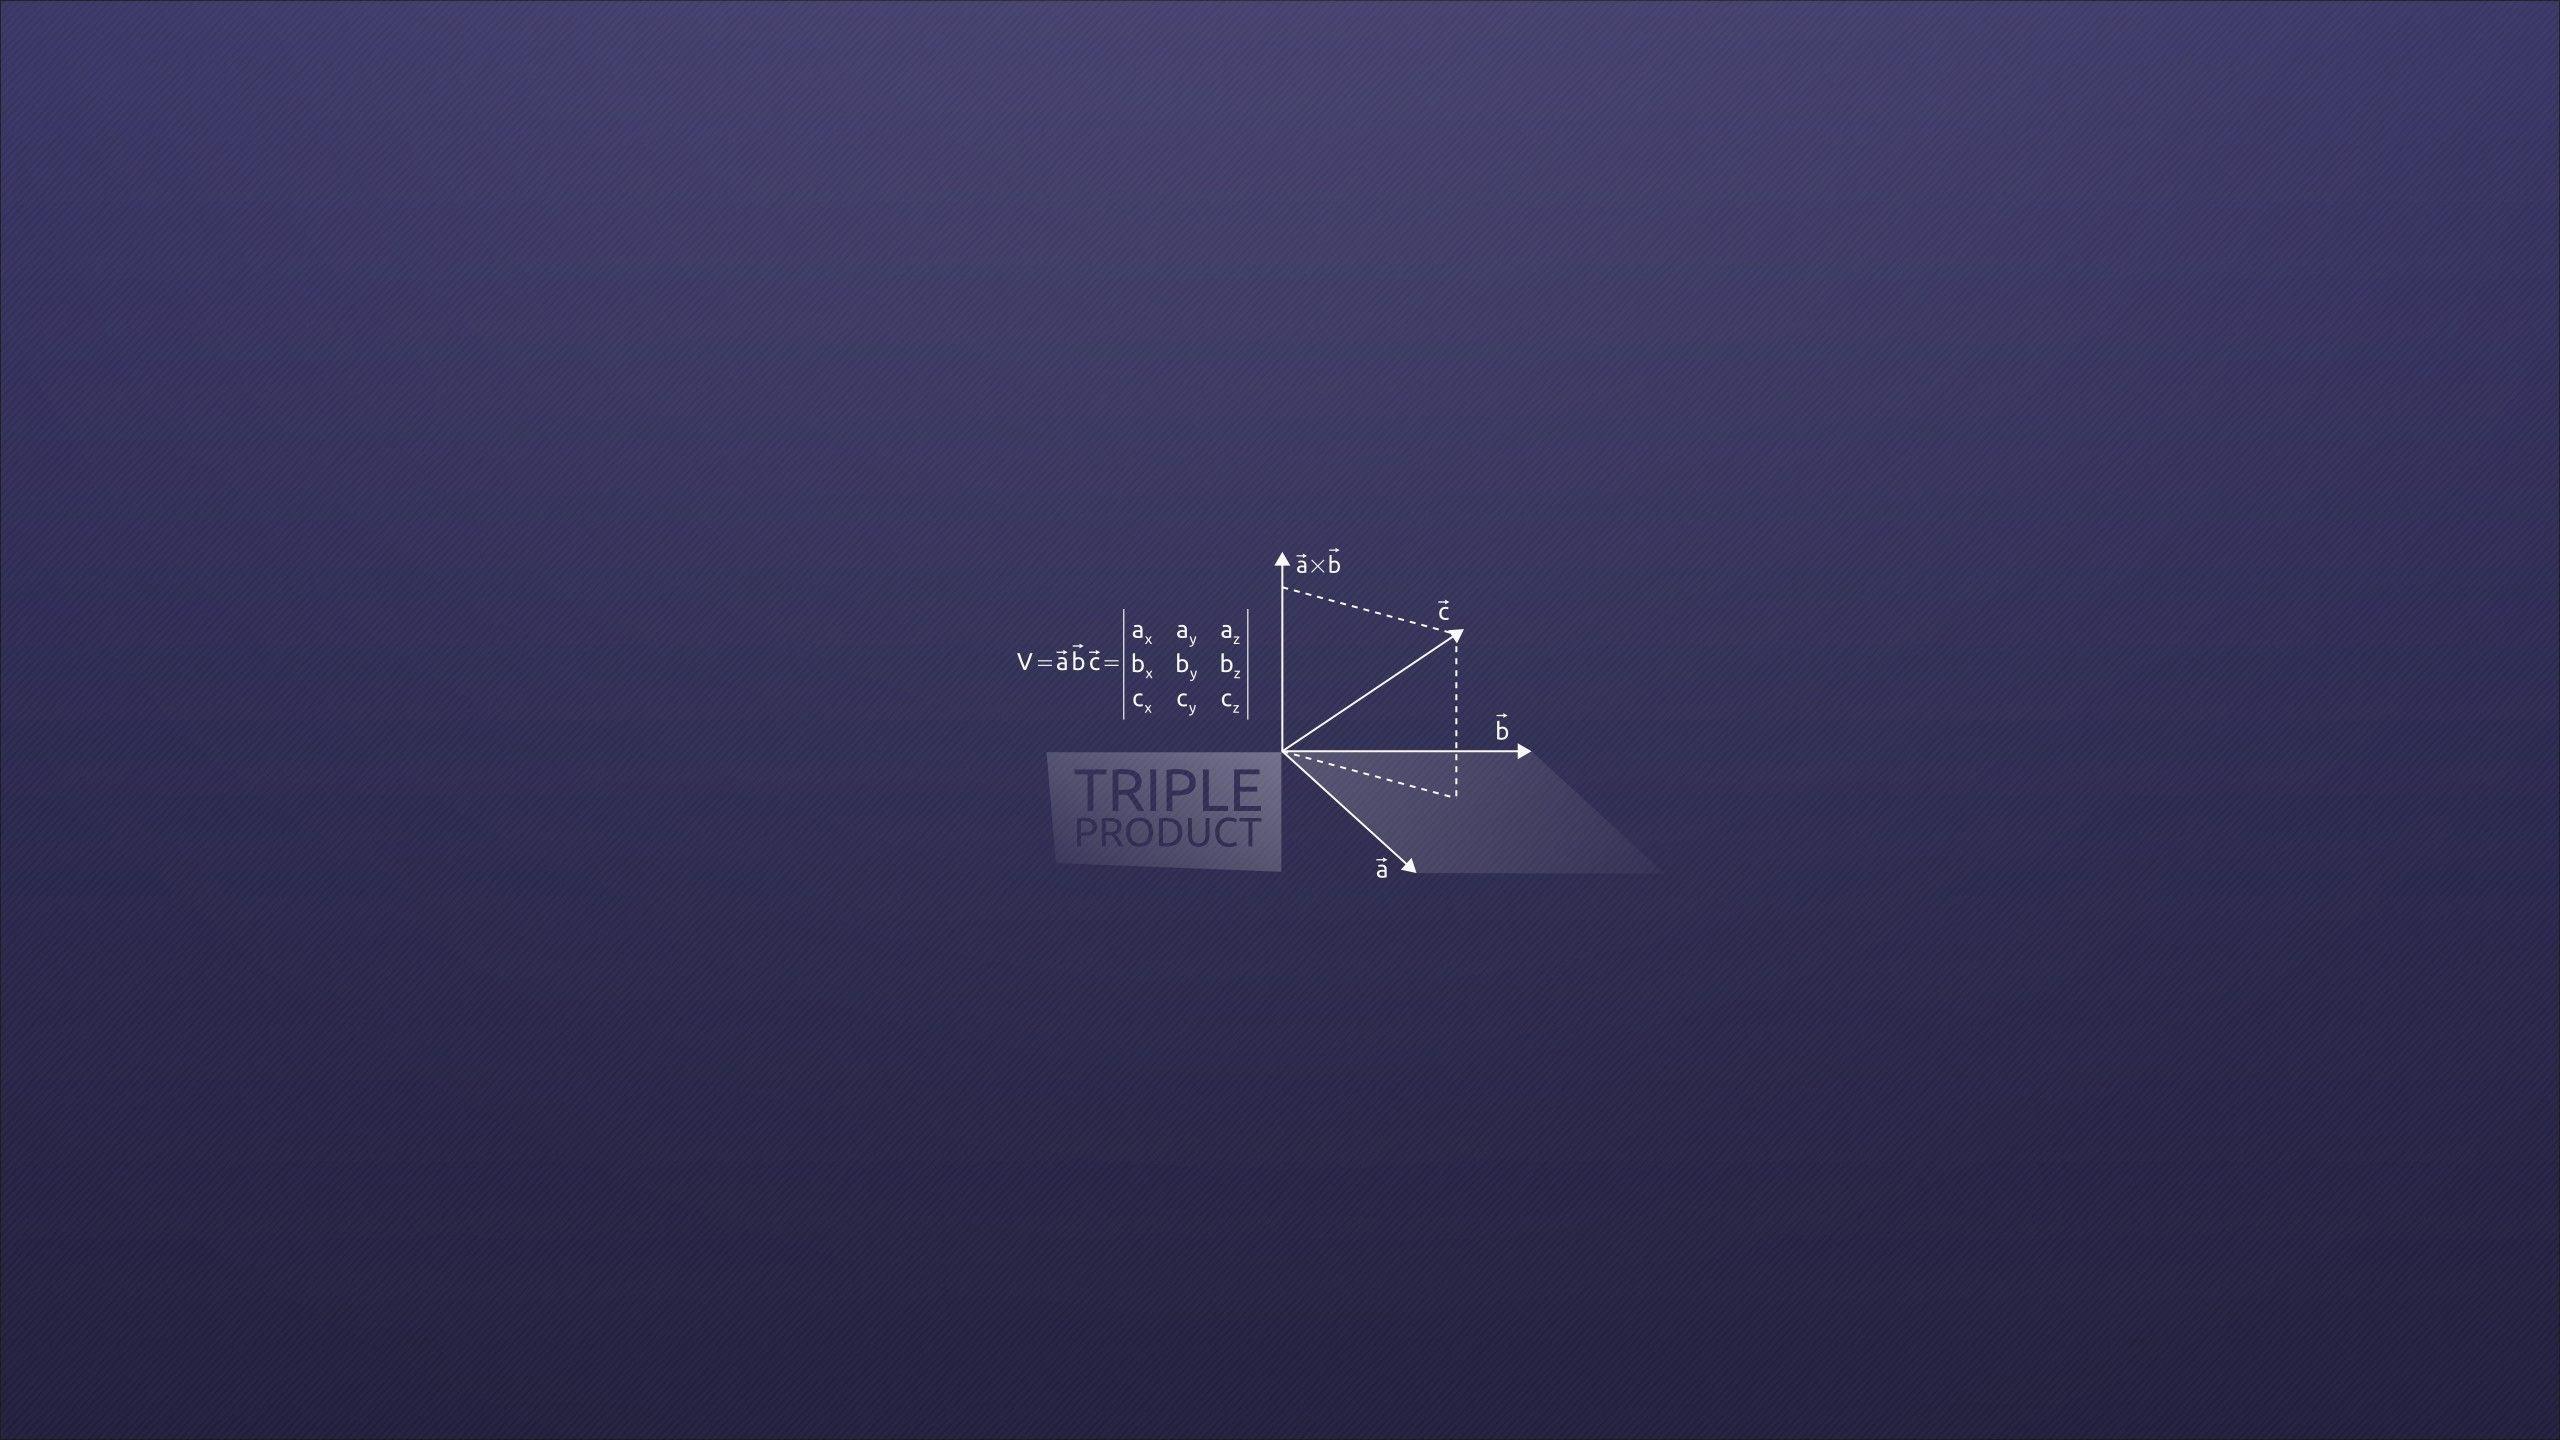 Mathematica Wallpaper. Background